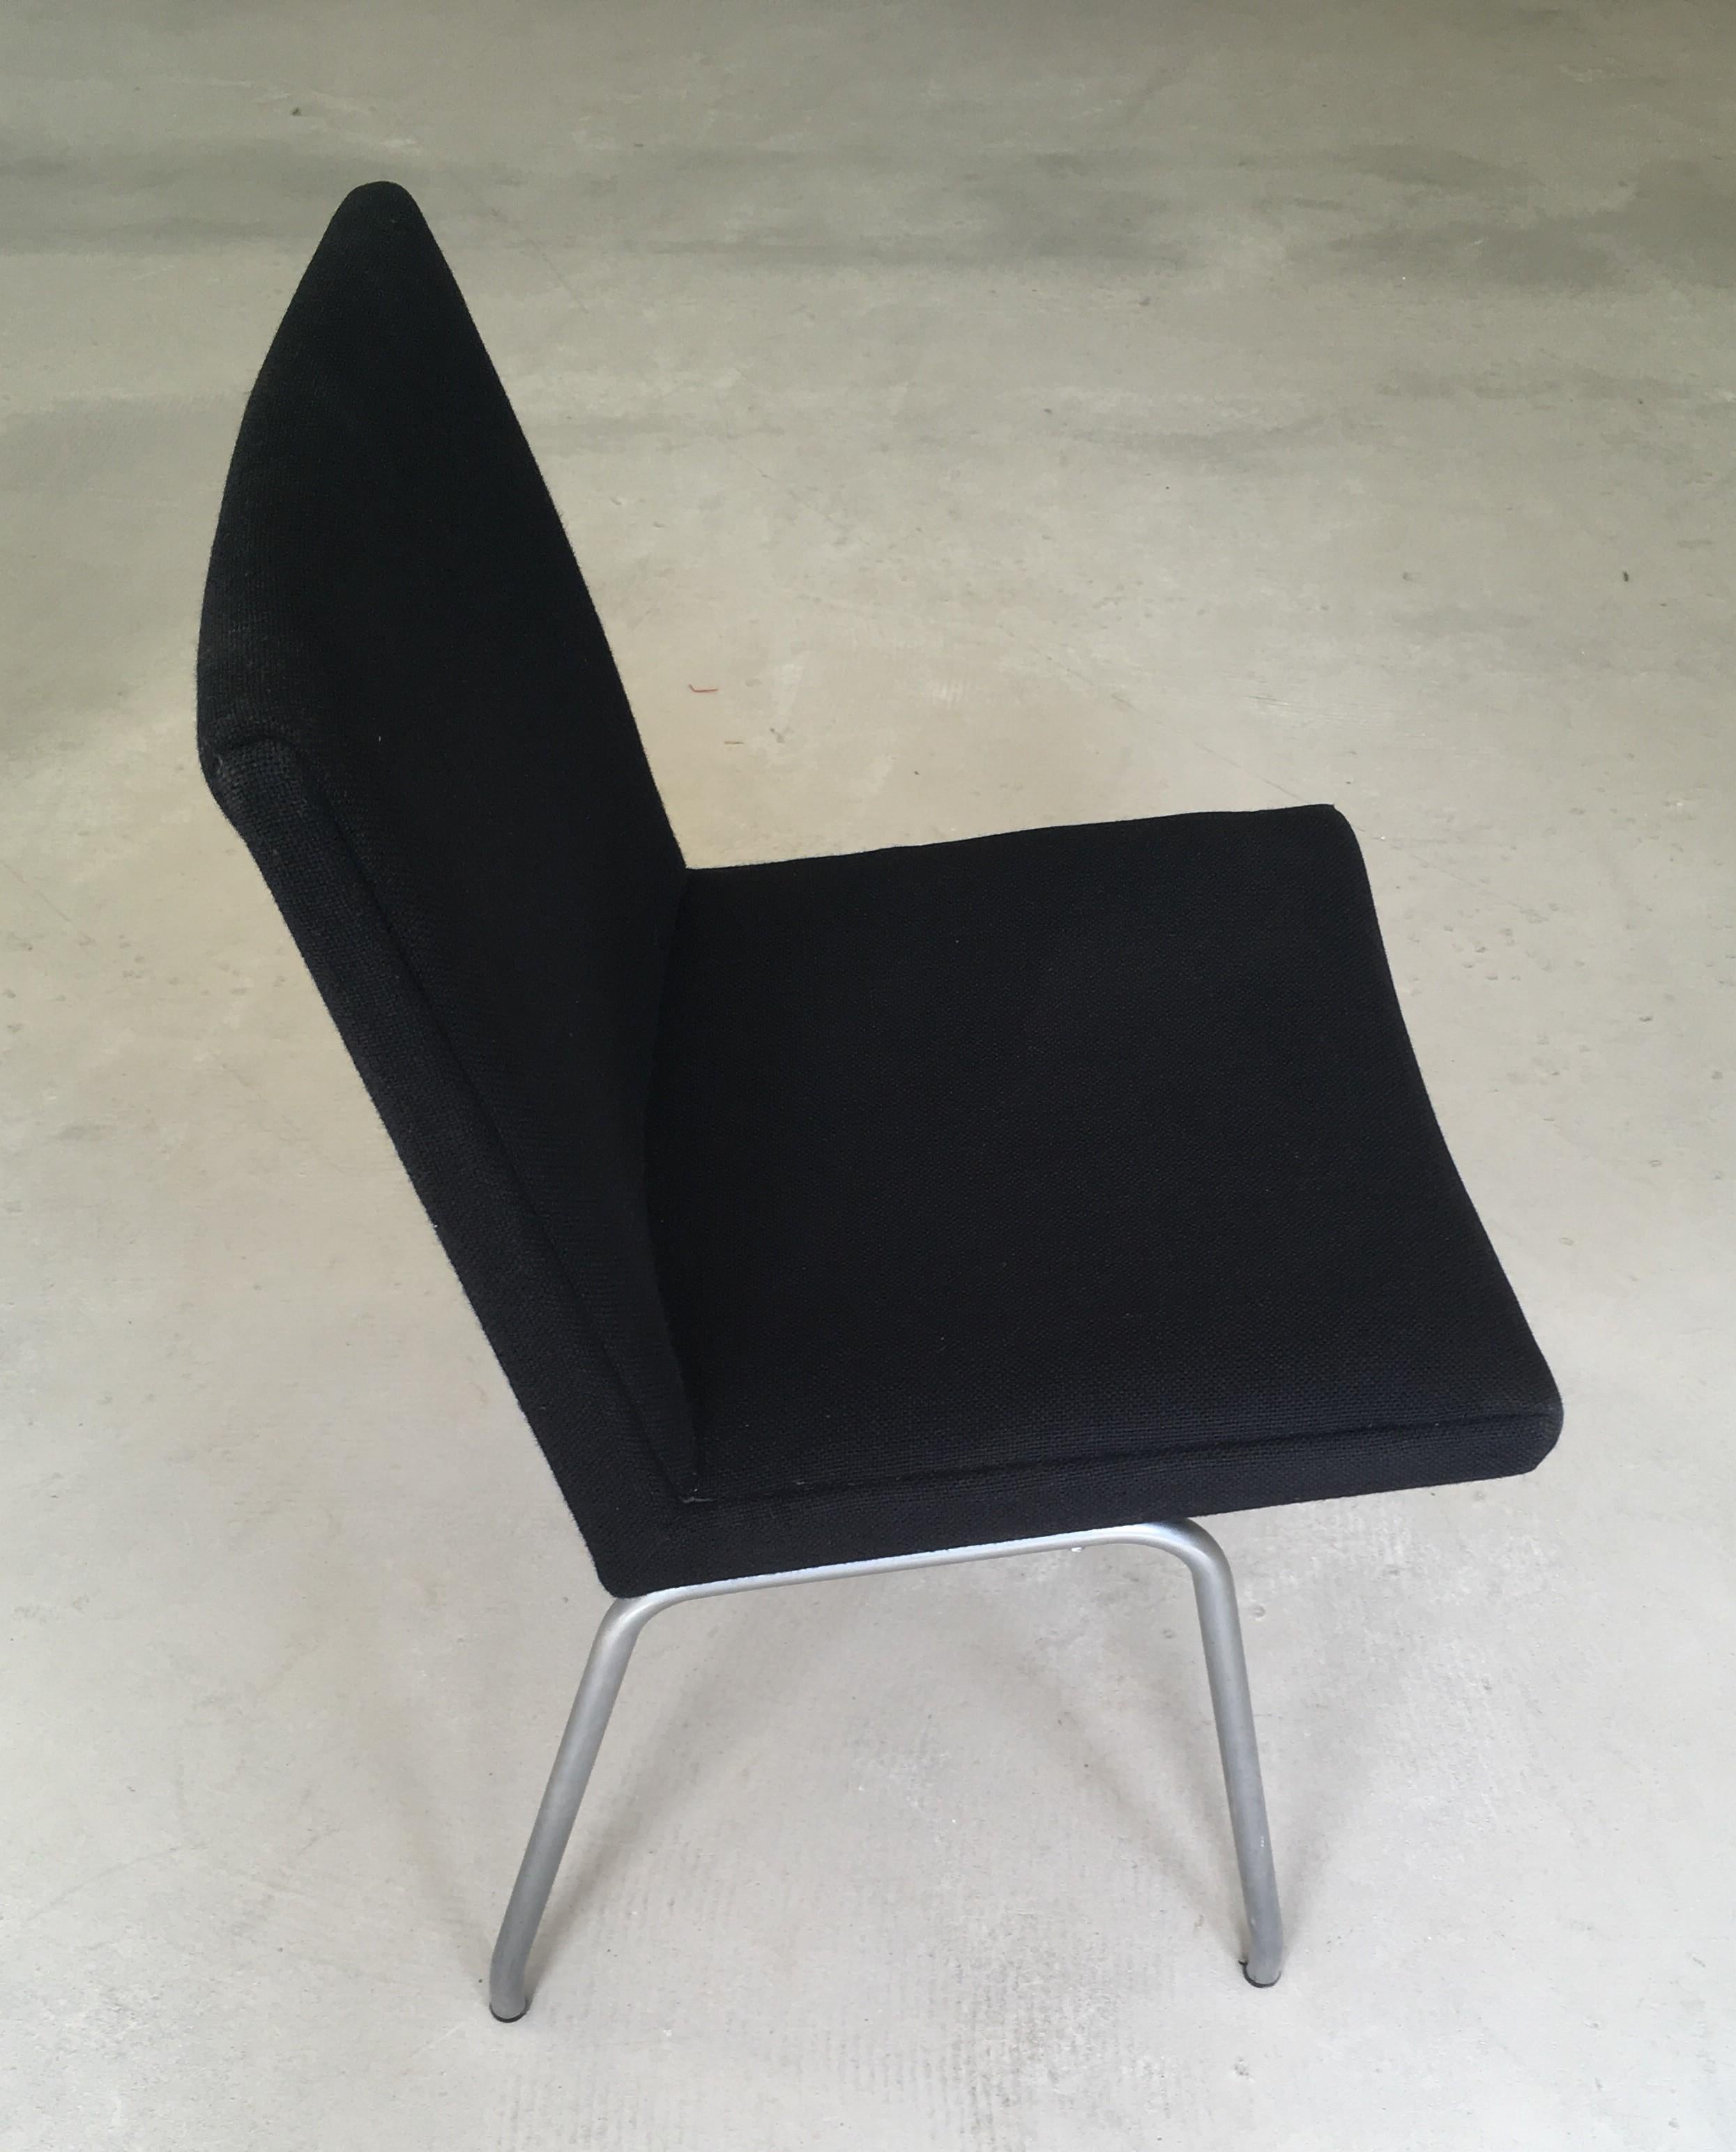 1960s Danish Hans J. Wegner Airport Chair Reupholstered in Black Fabric For Sale 1